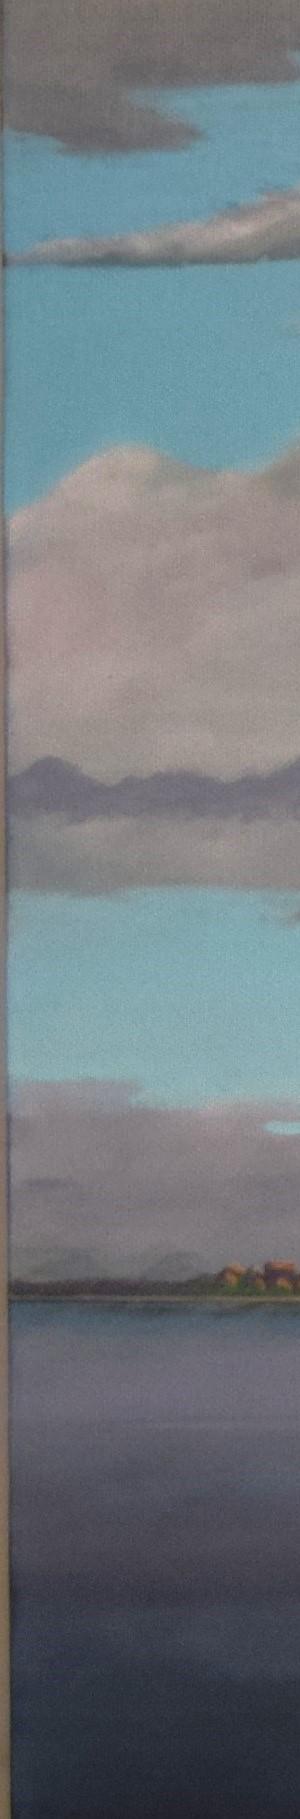 Het Markermeer  olieverf op doek  150 x50 cm